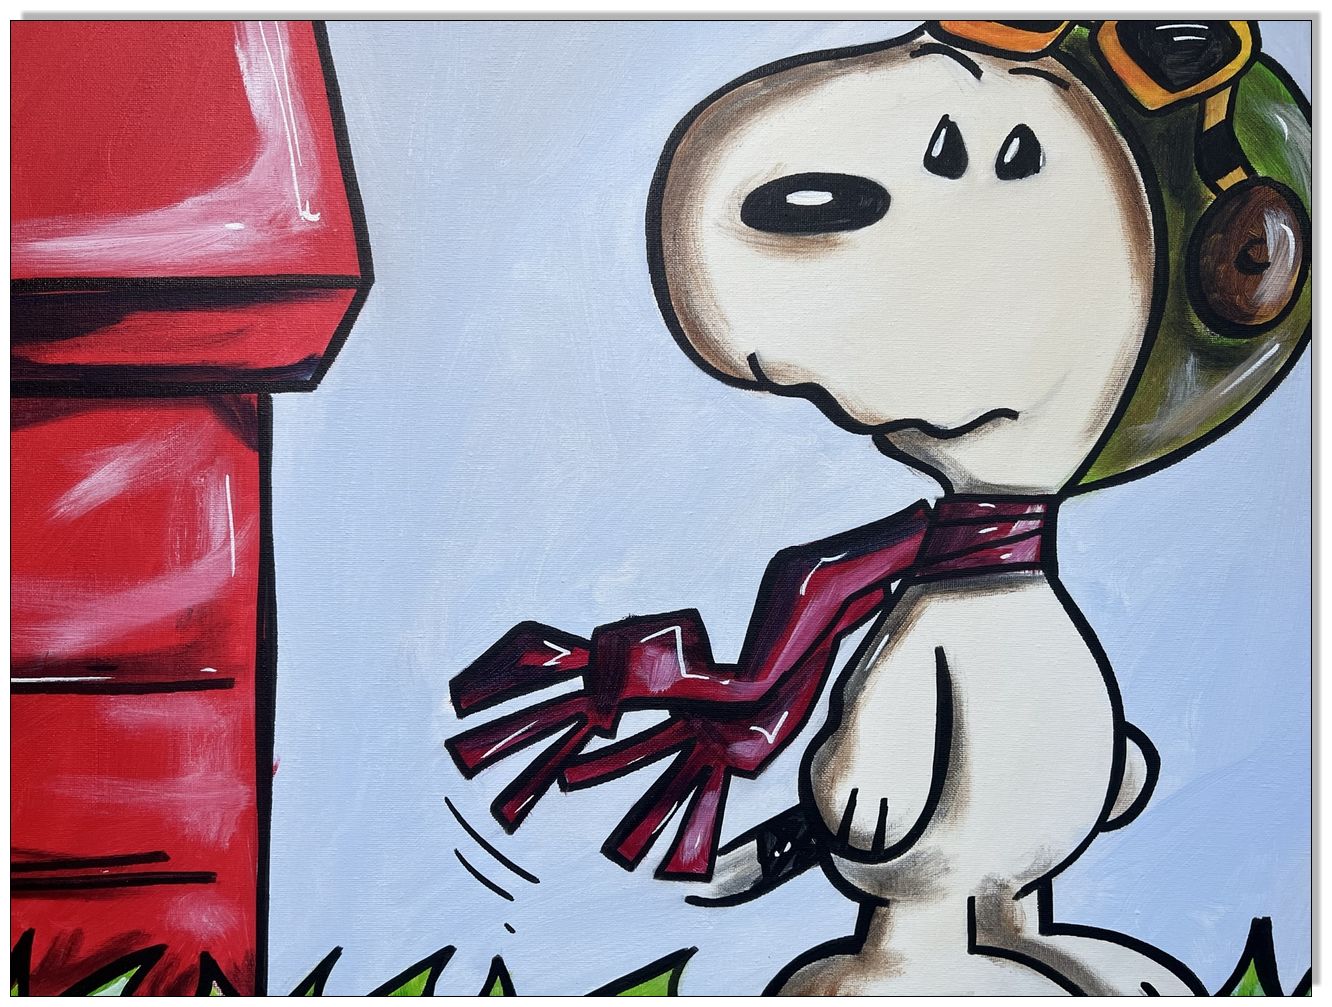 PEANUTS Snoopy vs. Red Baron IV - 40 x 50 cm 2